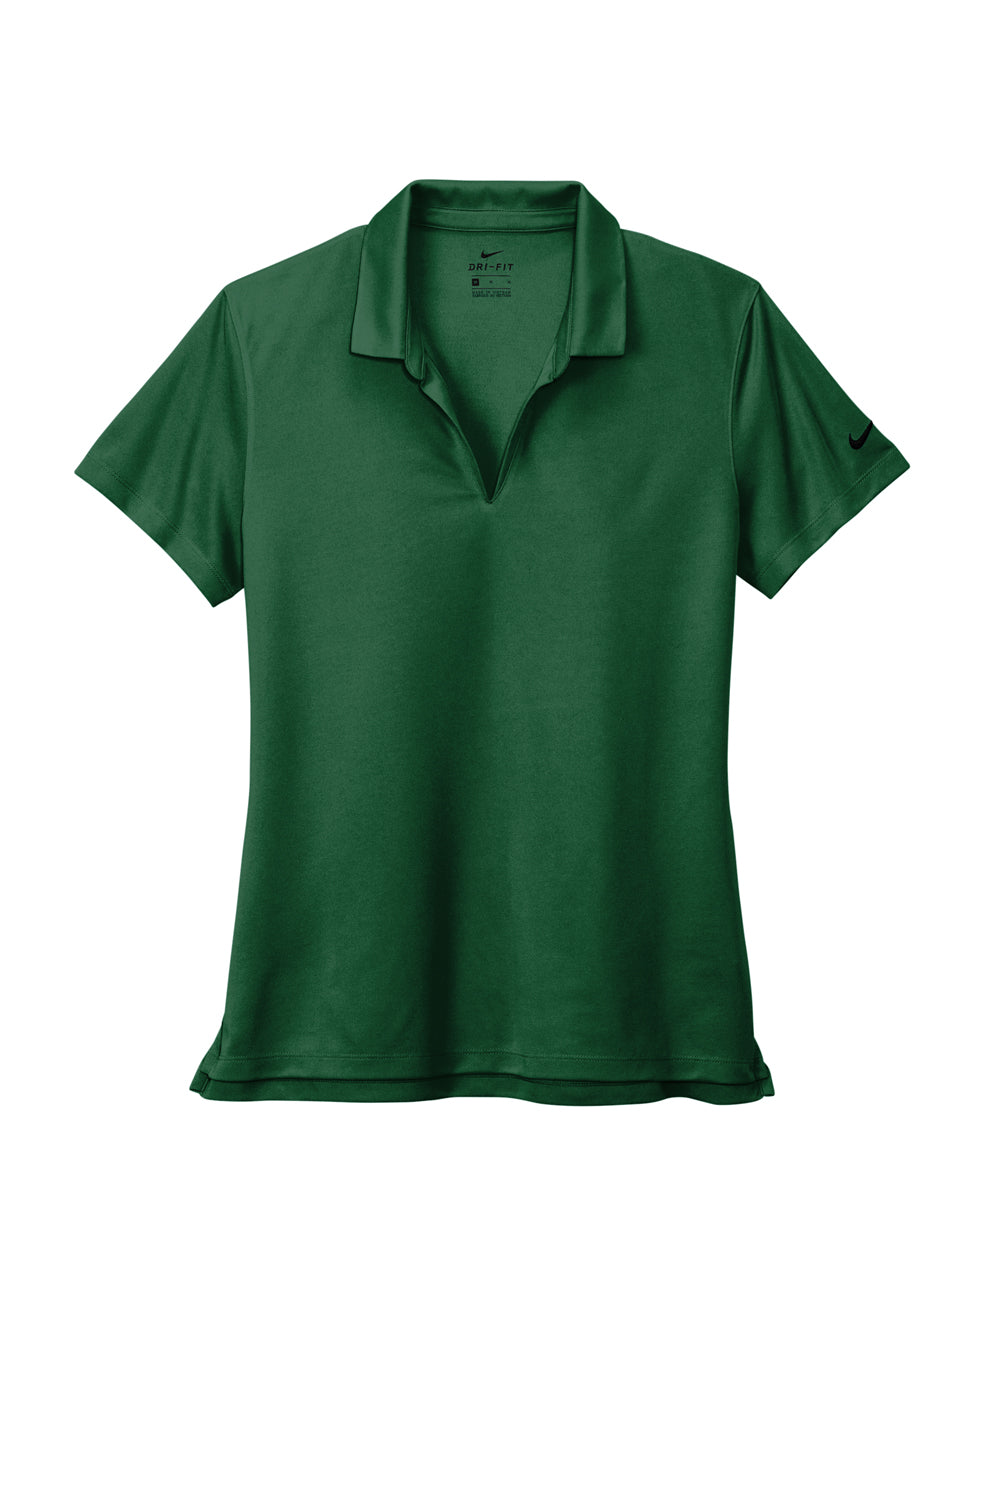 Nike NKDC1991 Womens Dri-Fit Moisture Wicking Micro Pique 2.0 Short Sleeve Polo Shirt Gorge Green Flat Front